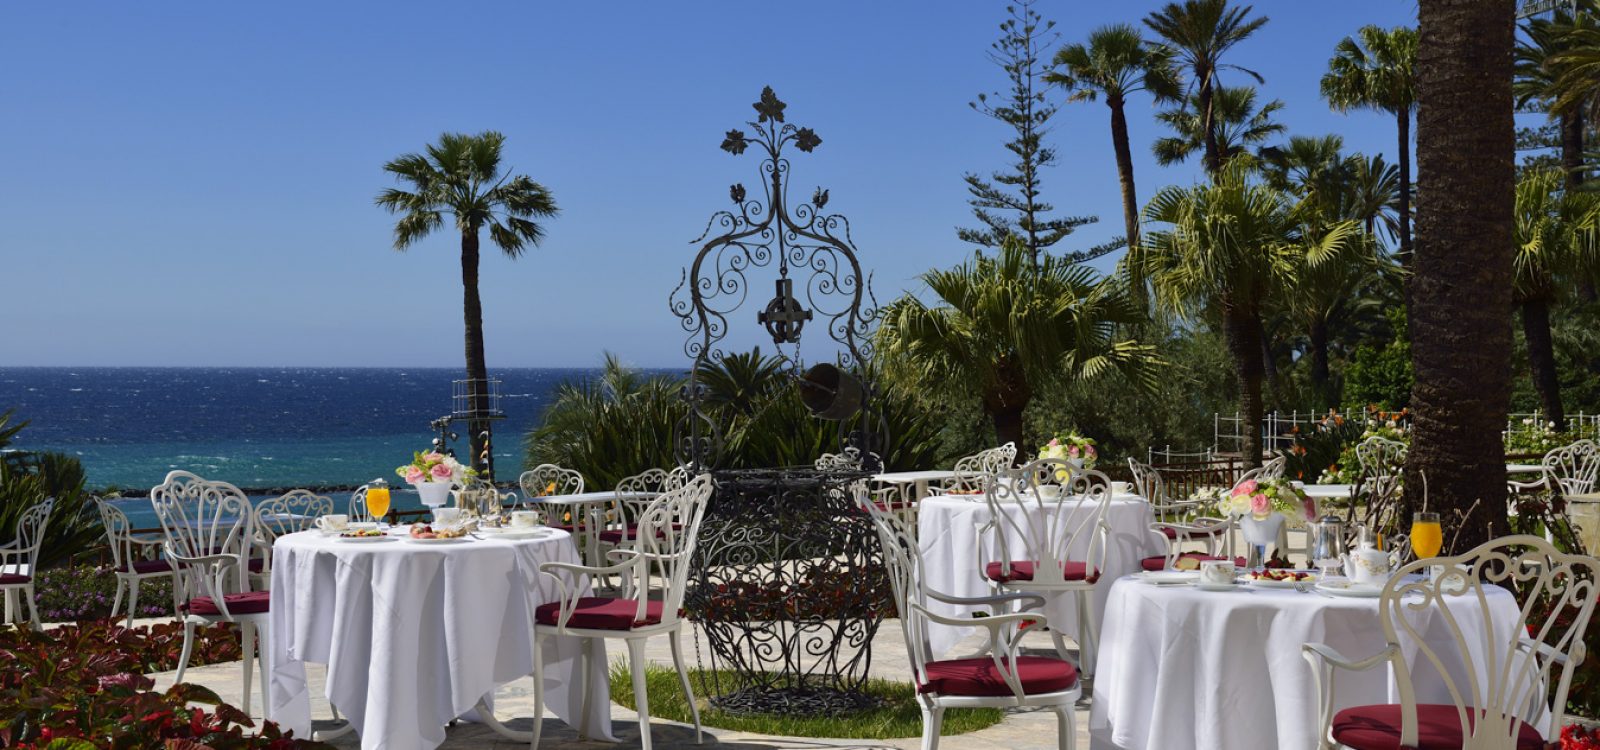 Royal Hotel Sanremo-37 Breakfast on the terrace-WEB